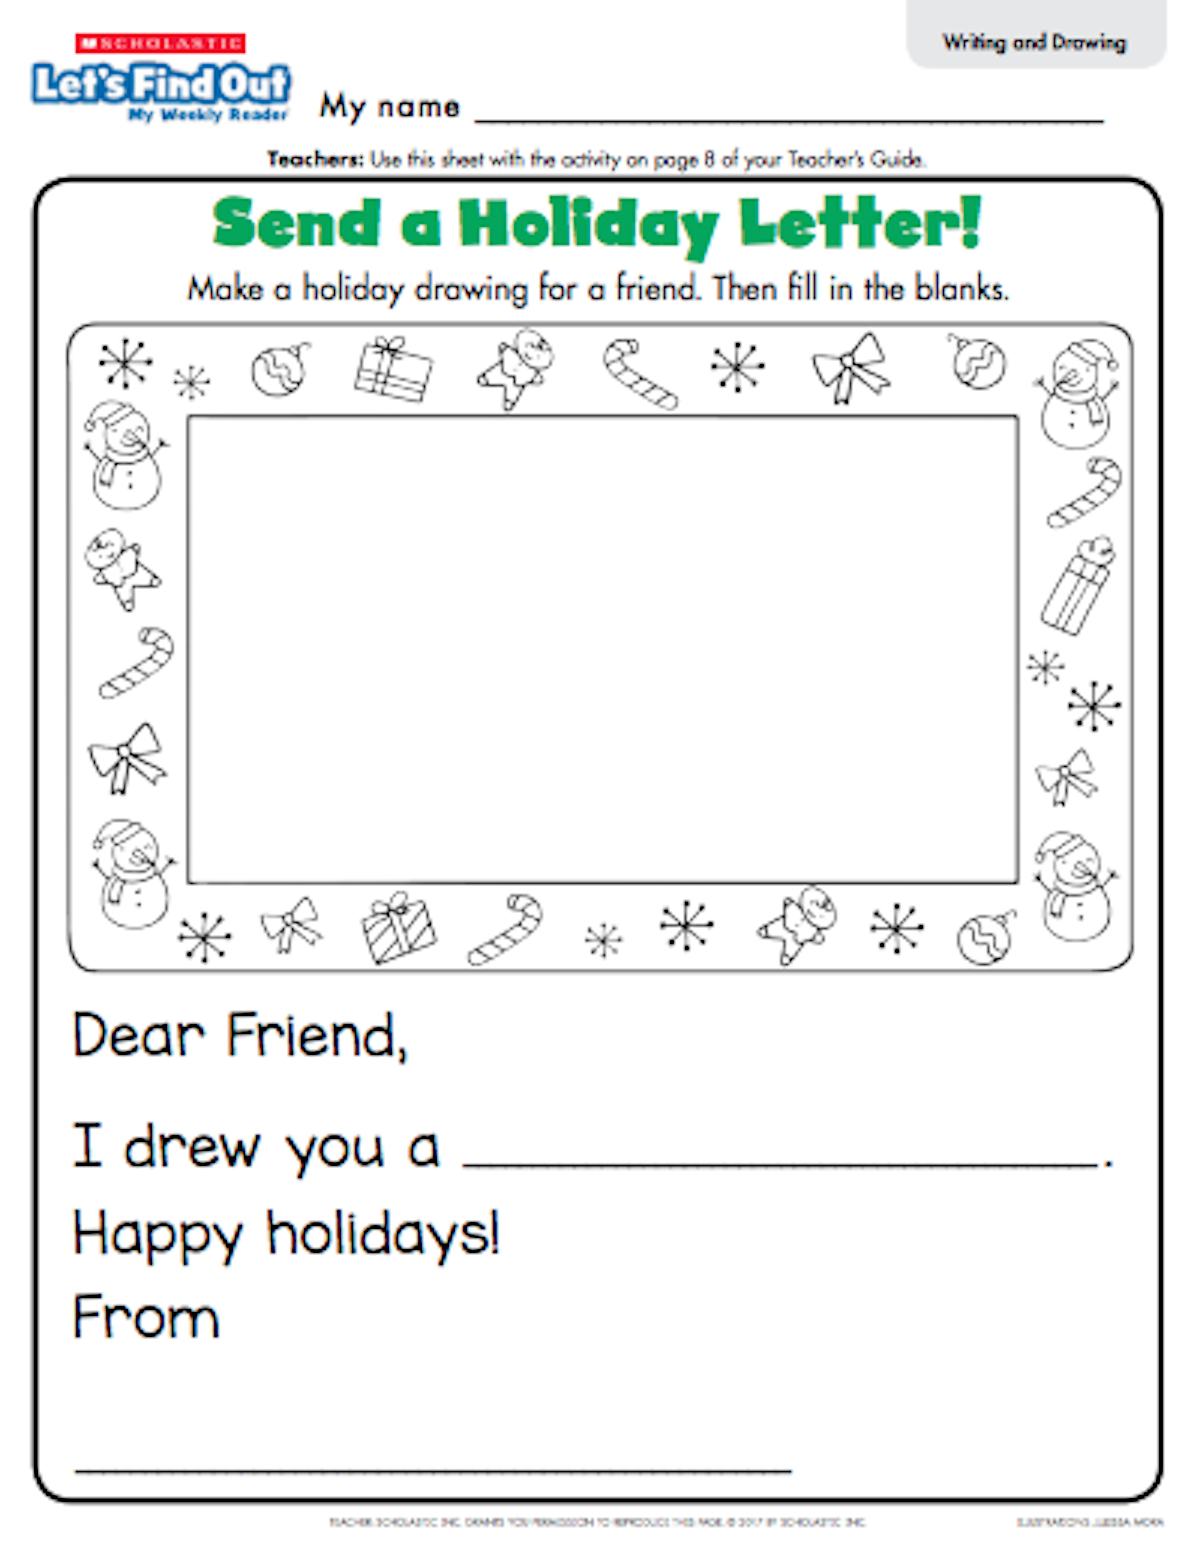 Teaching Letter Writing Skills With Santa | Scholastic Pertaining To Dear Santa Template Kindergarten Letter